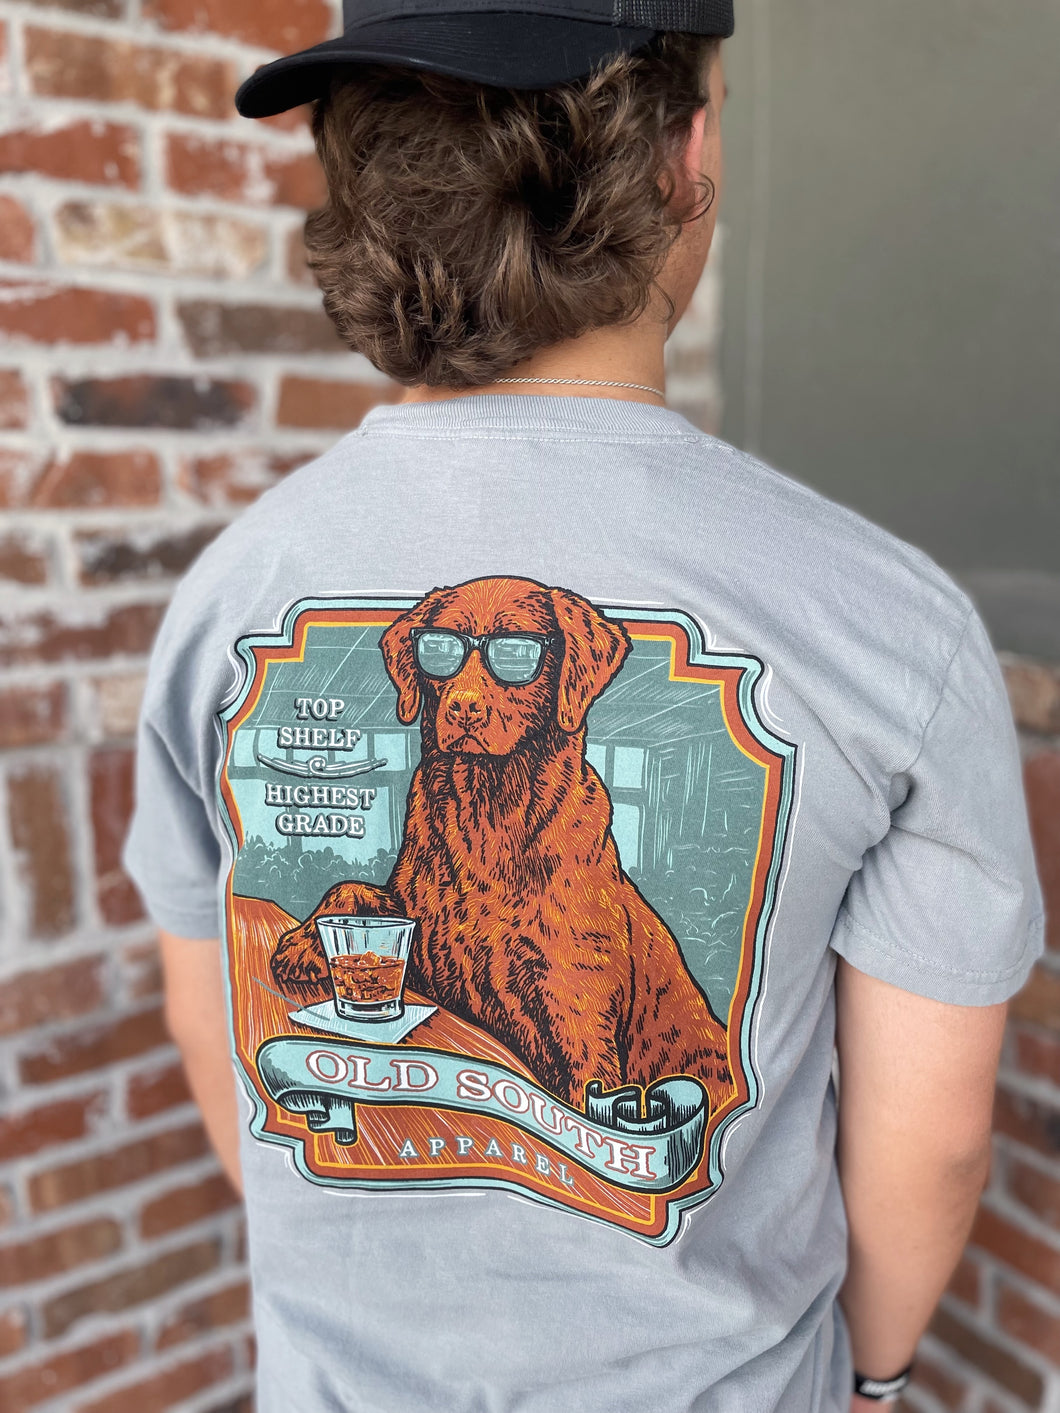 Old South Dog Bar T-Shirt